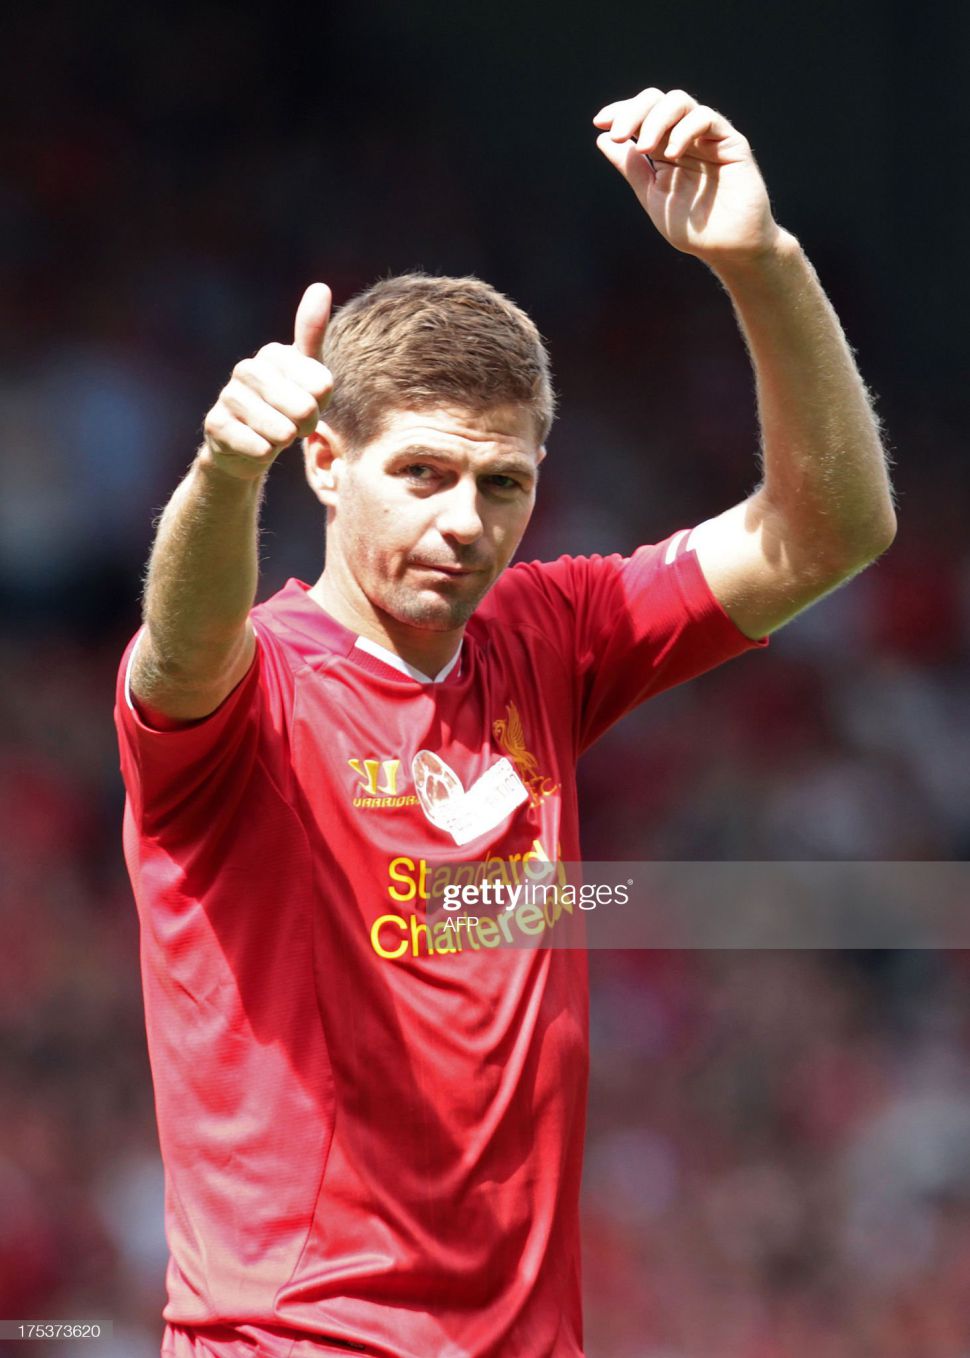 Áo Gerrard 8 Liverpool testimonial 2013 home shirt jersey 2014